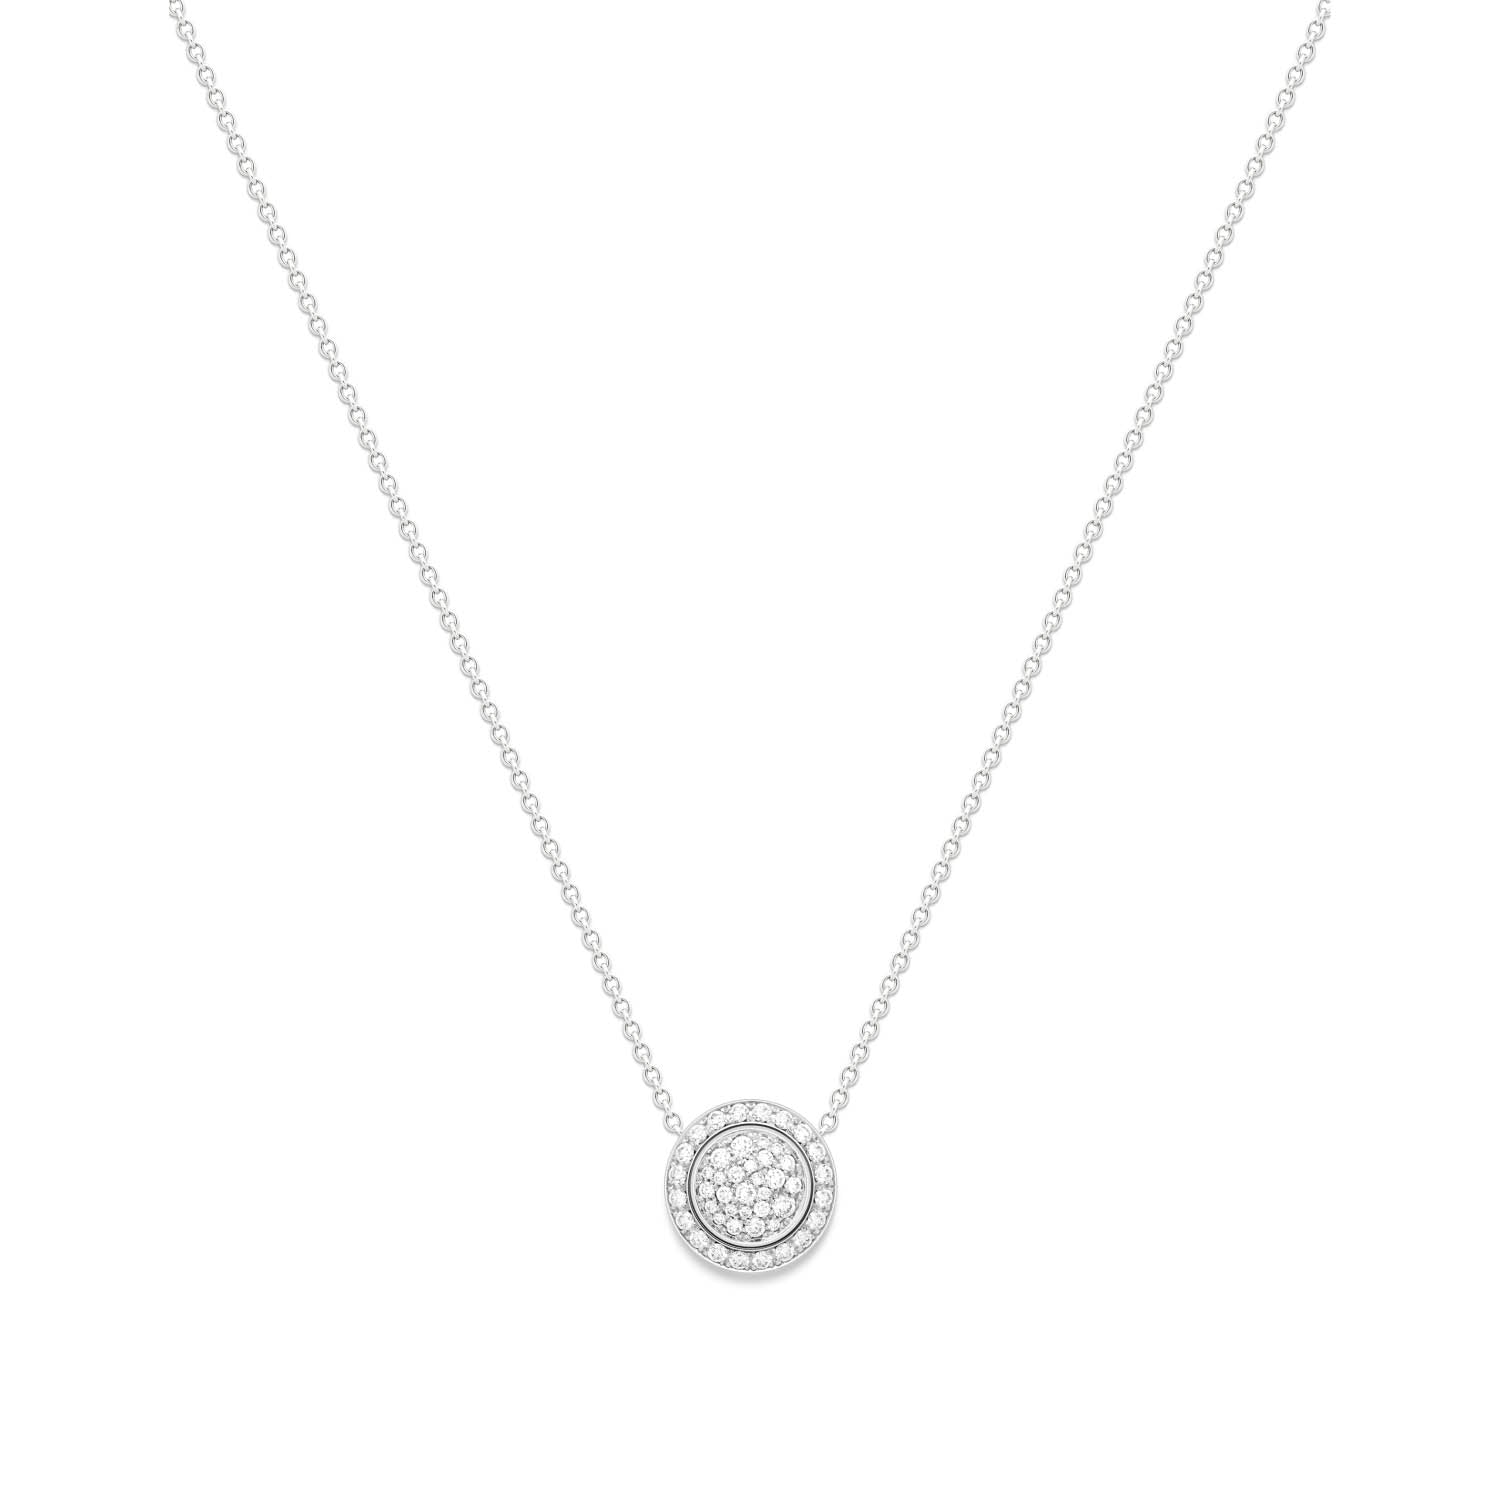 Possession pendant in 18K white gold set with 46 brilliant-cut diamonds (approx. 0.48 ct).